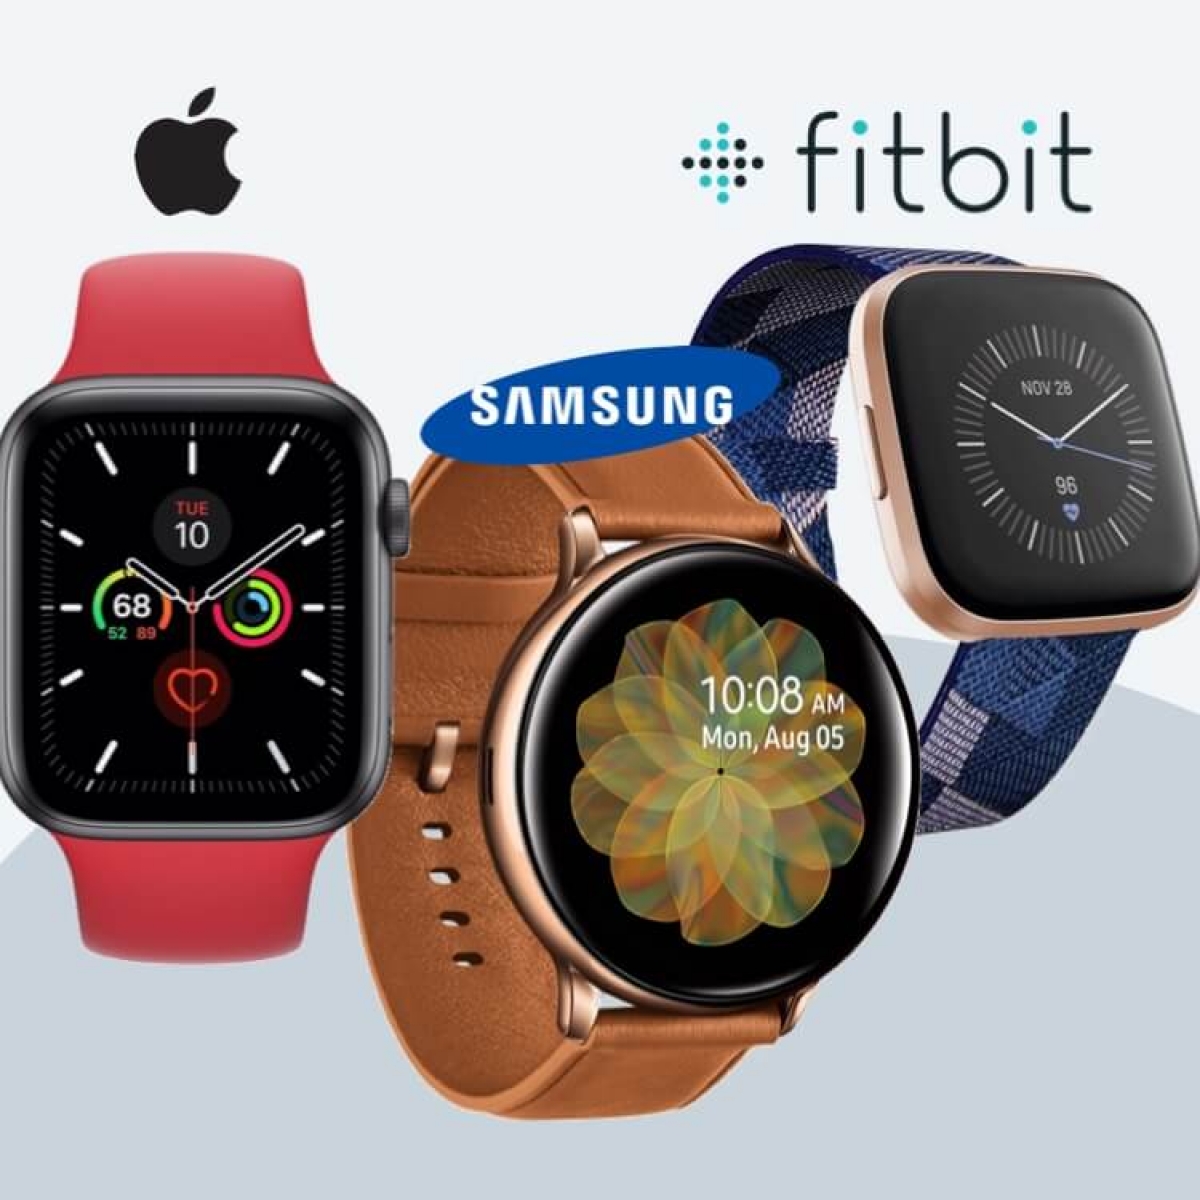 Smarwatches compared - Apple 5, Samsung Active 2, Fitbit Versa